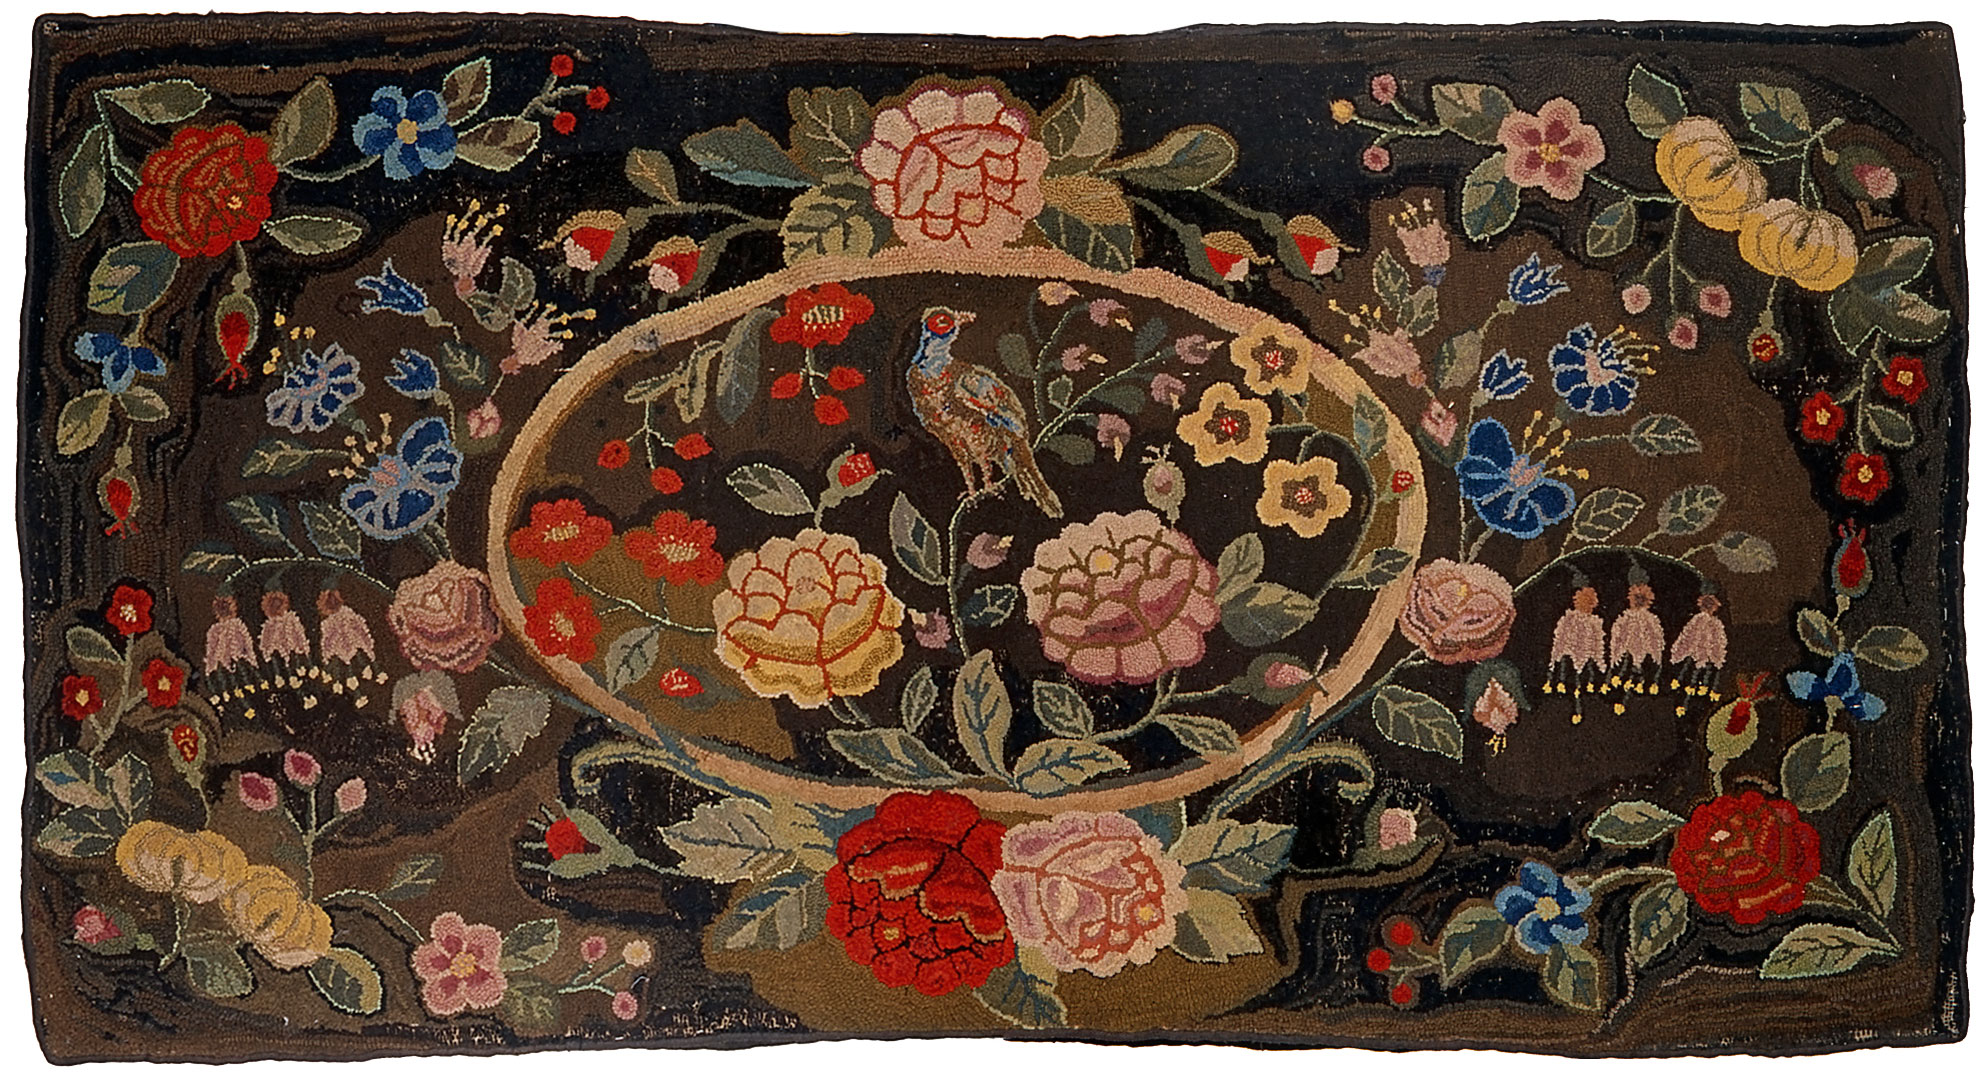 Hooked rug, North America, c. 1800–1900